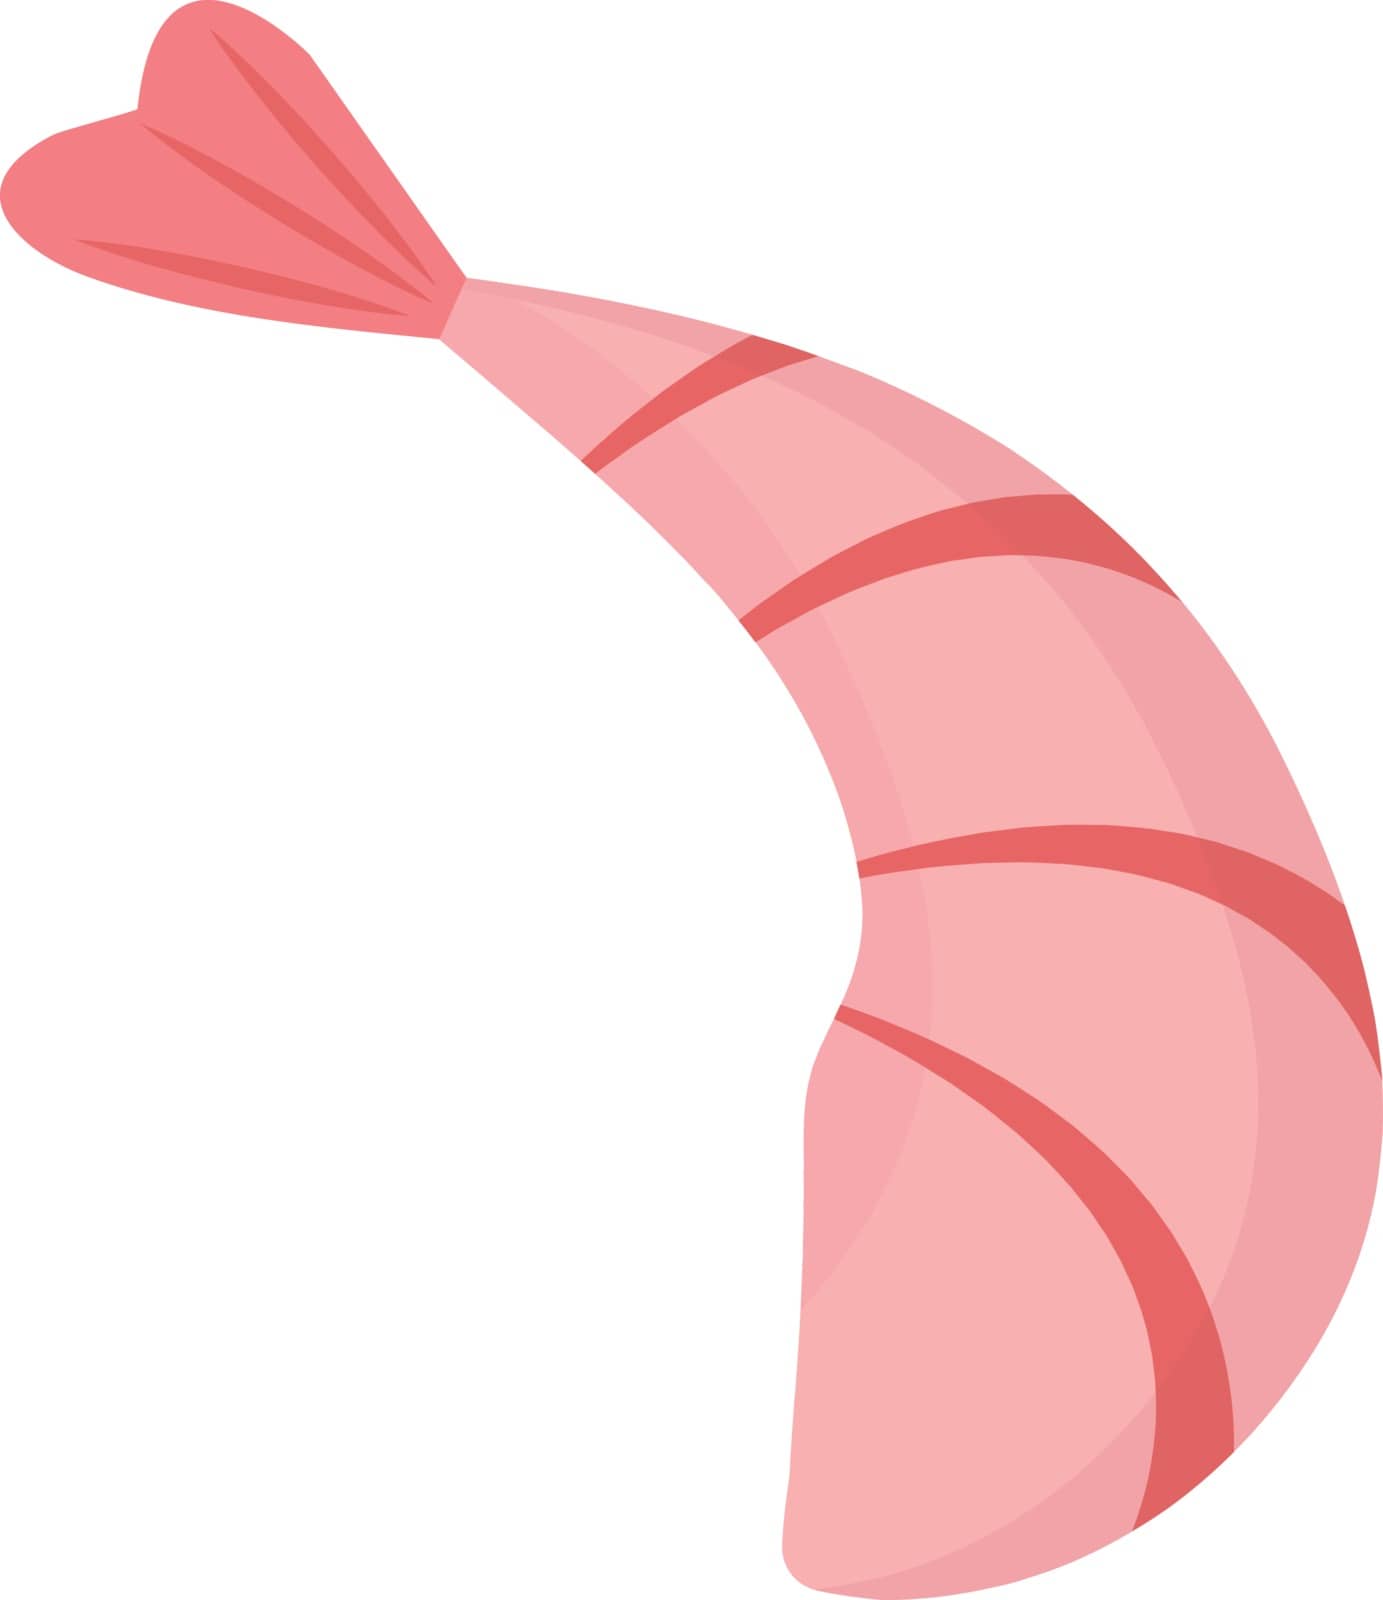 Shrimp icon flat style. Prawn isolated on white background. Vector illustration, clip art